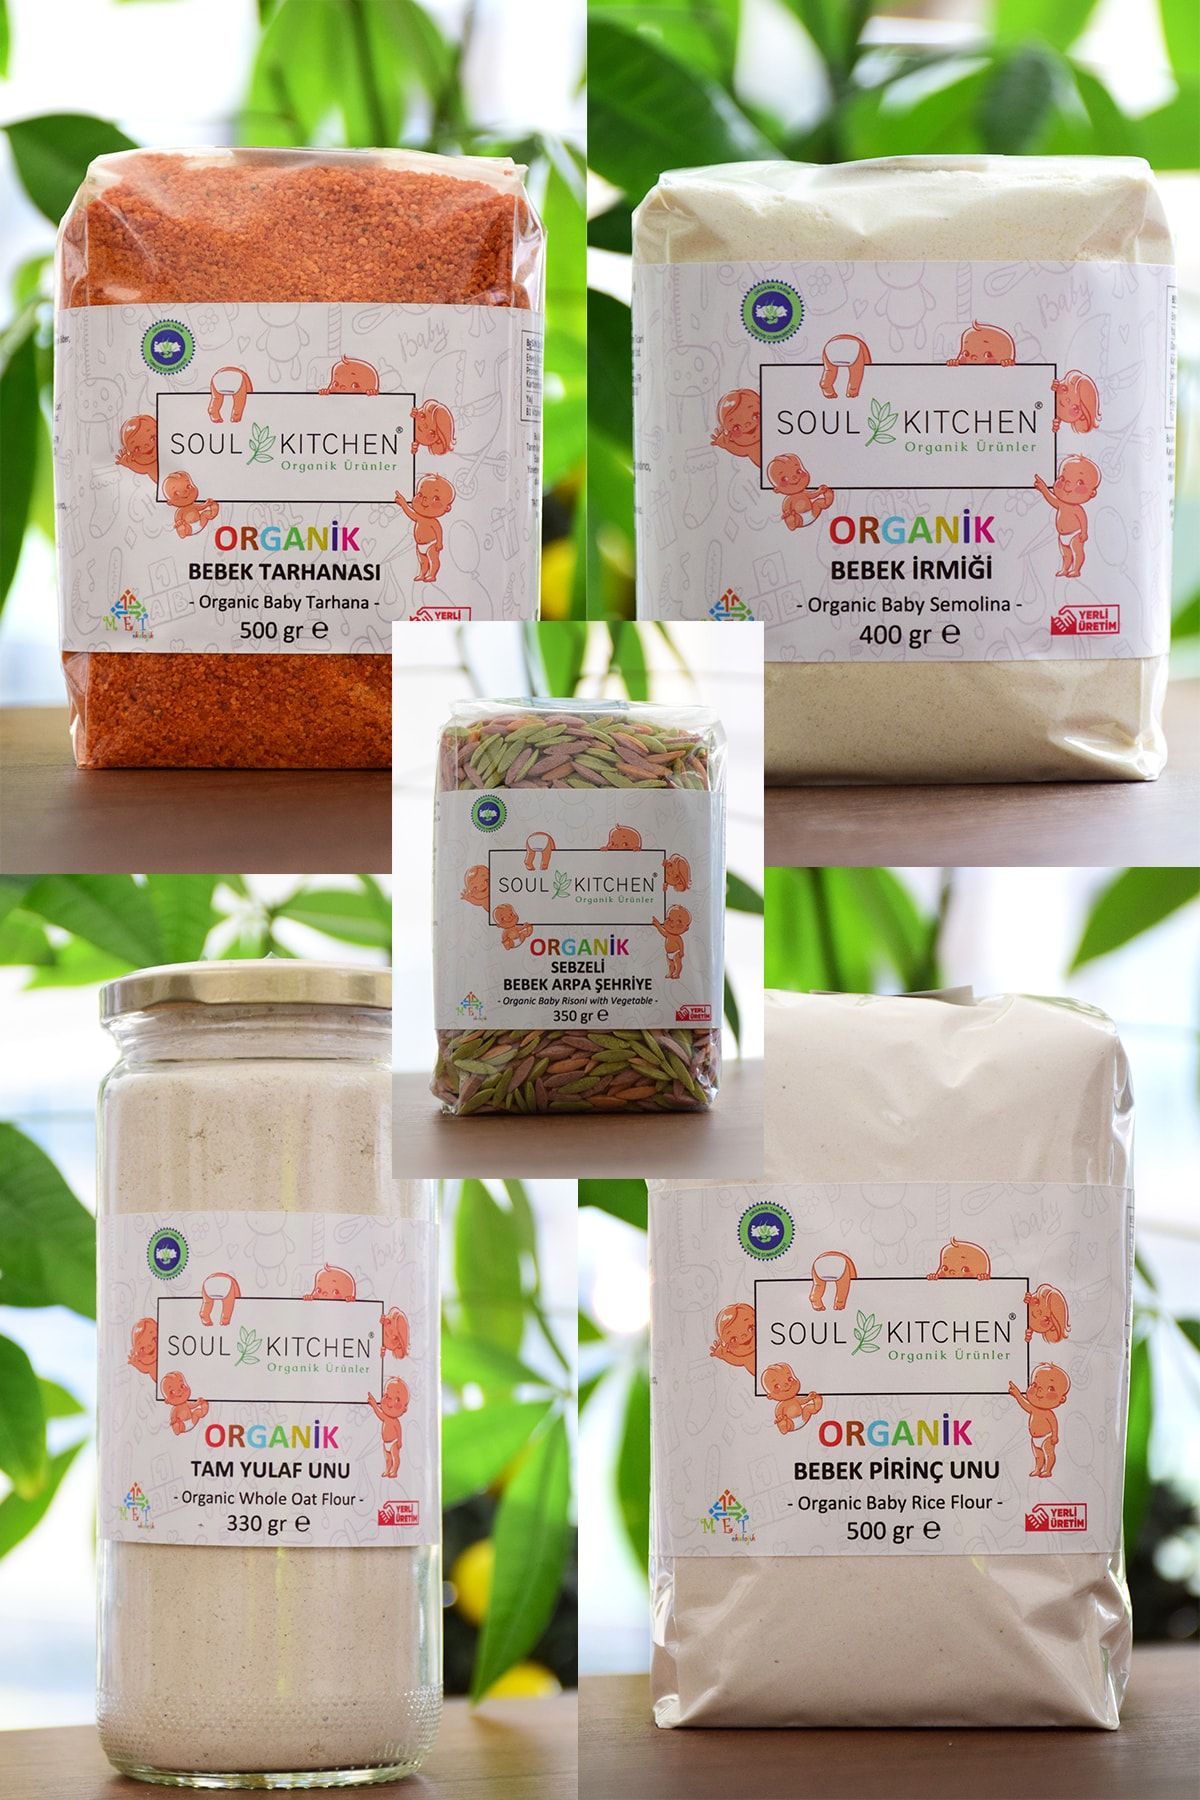 Soul Kitchen Organik Ürünler Organik Bebek Ek Gıda Seti 6ay 5li Paket Model 1